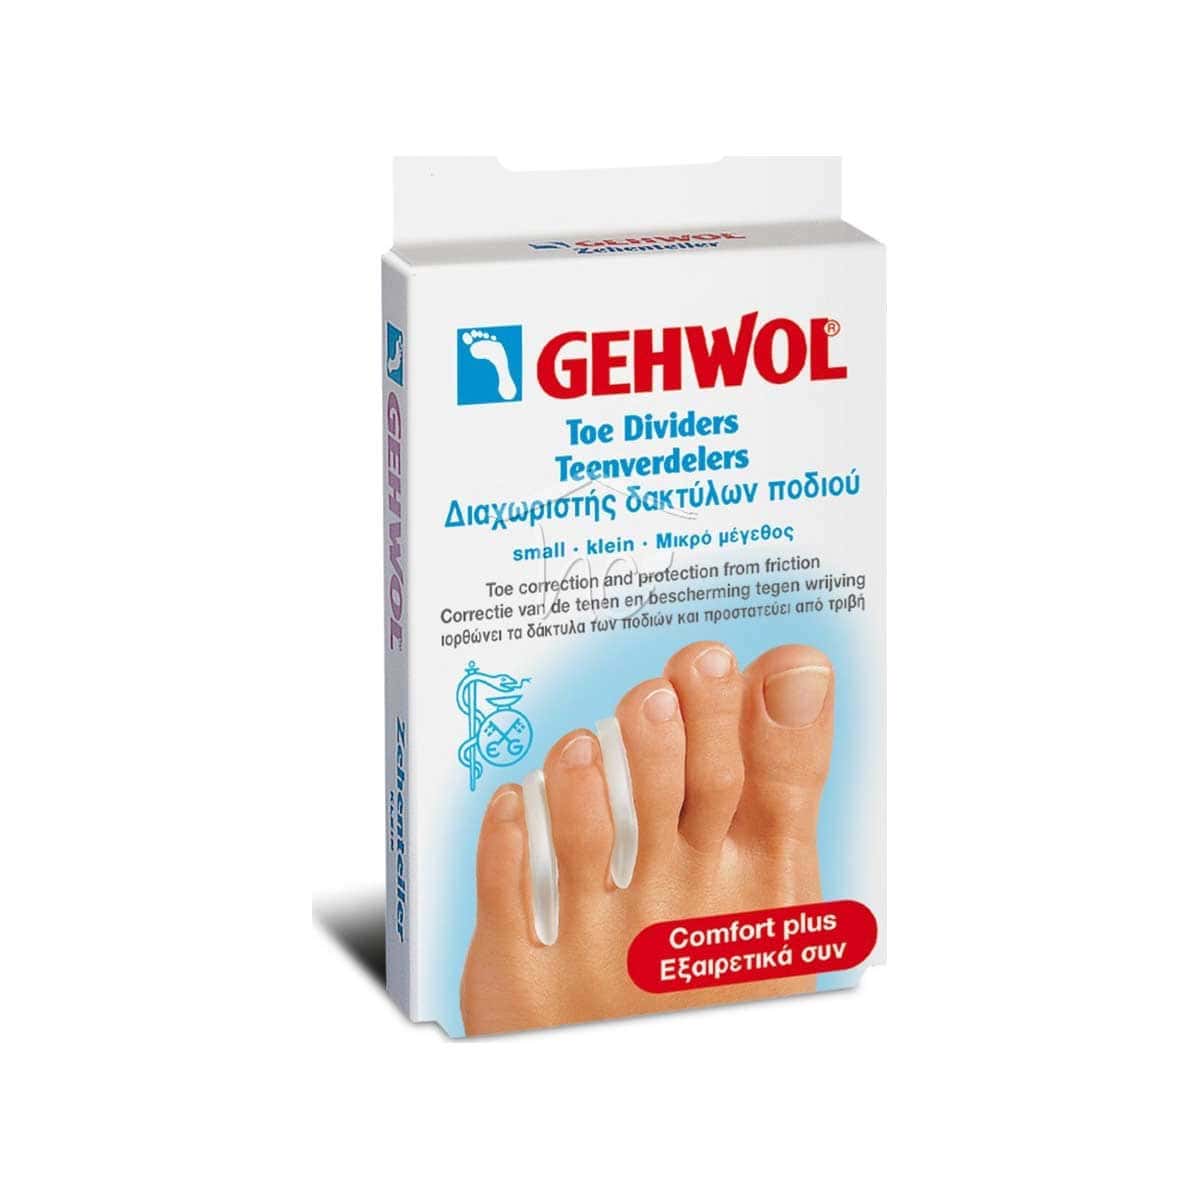 Gehwol-Toe-Divider-Small-3-tmx-4013474116357